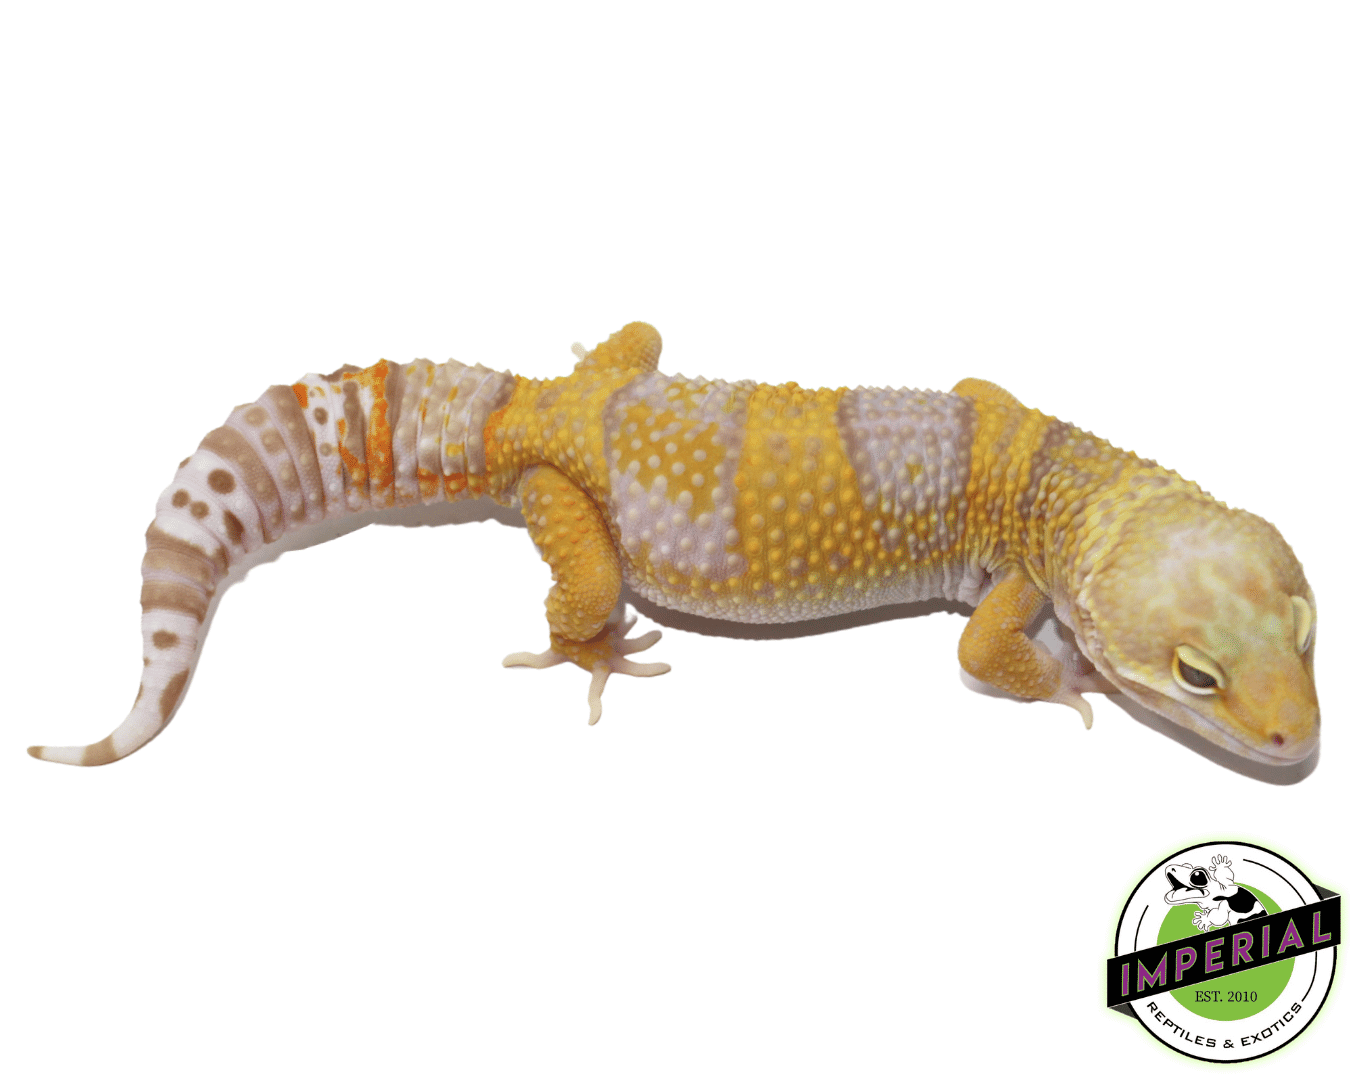 rainwater leopard gecko for sale, buy reptiles online